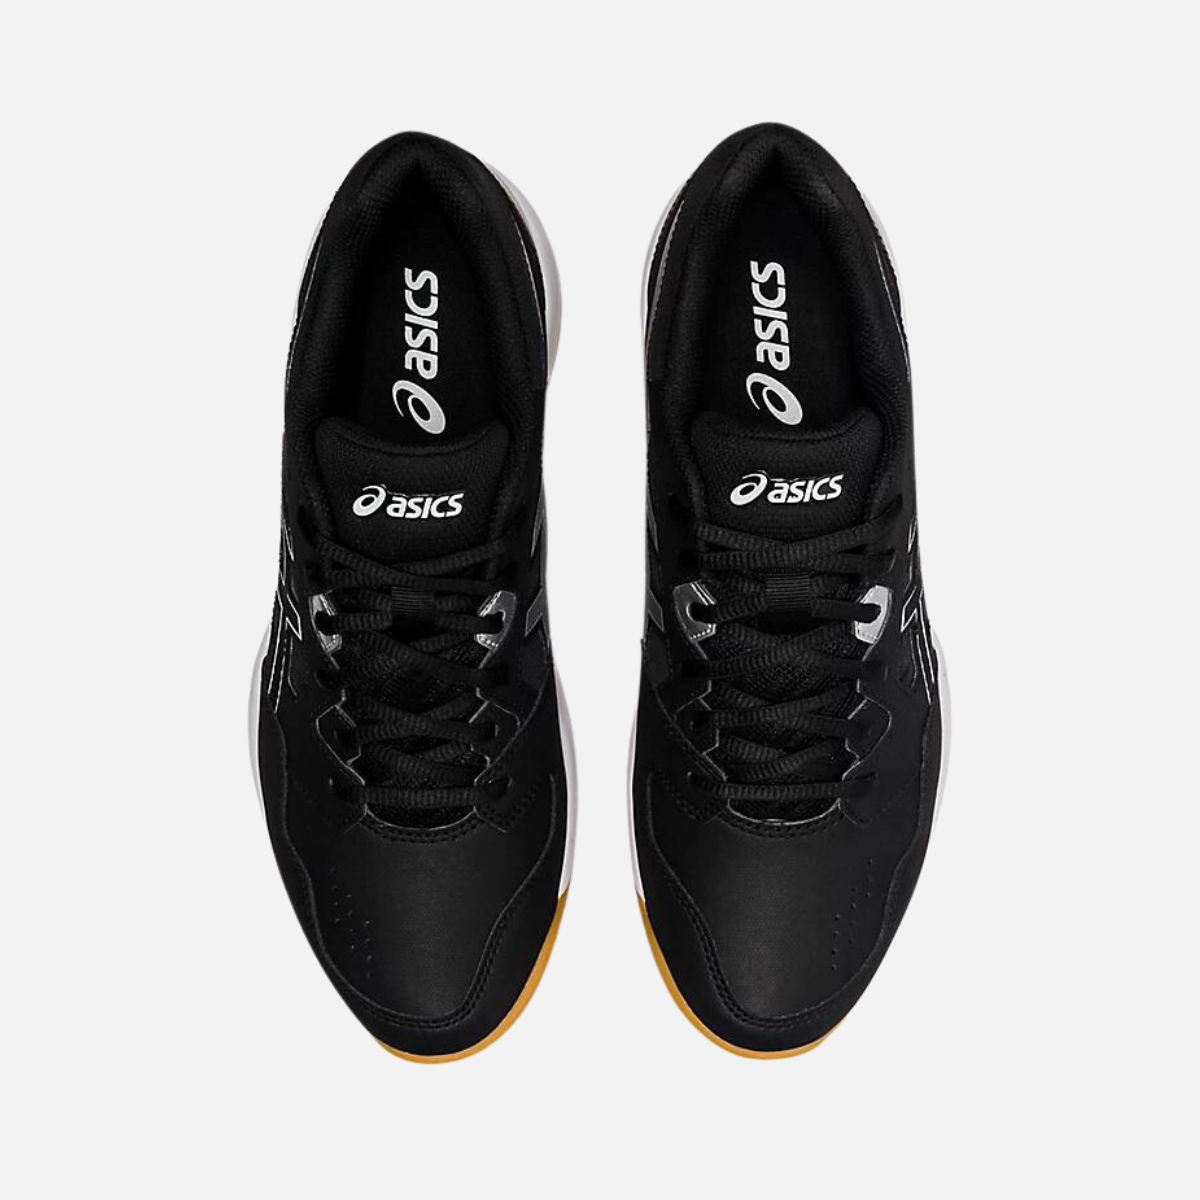 Asics Gel-Renma  Men's Badminton Shoes - Black/White